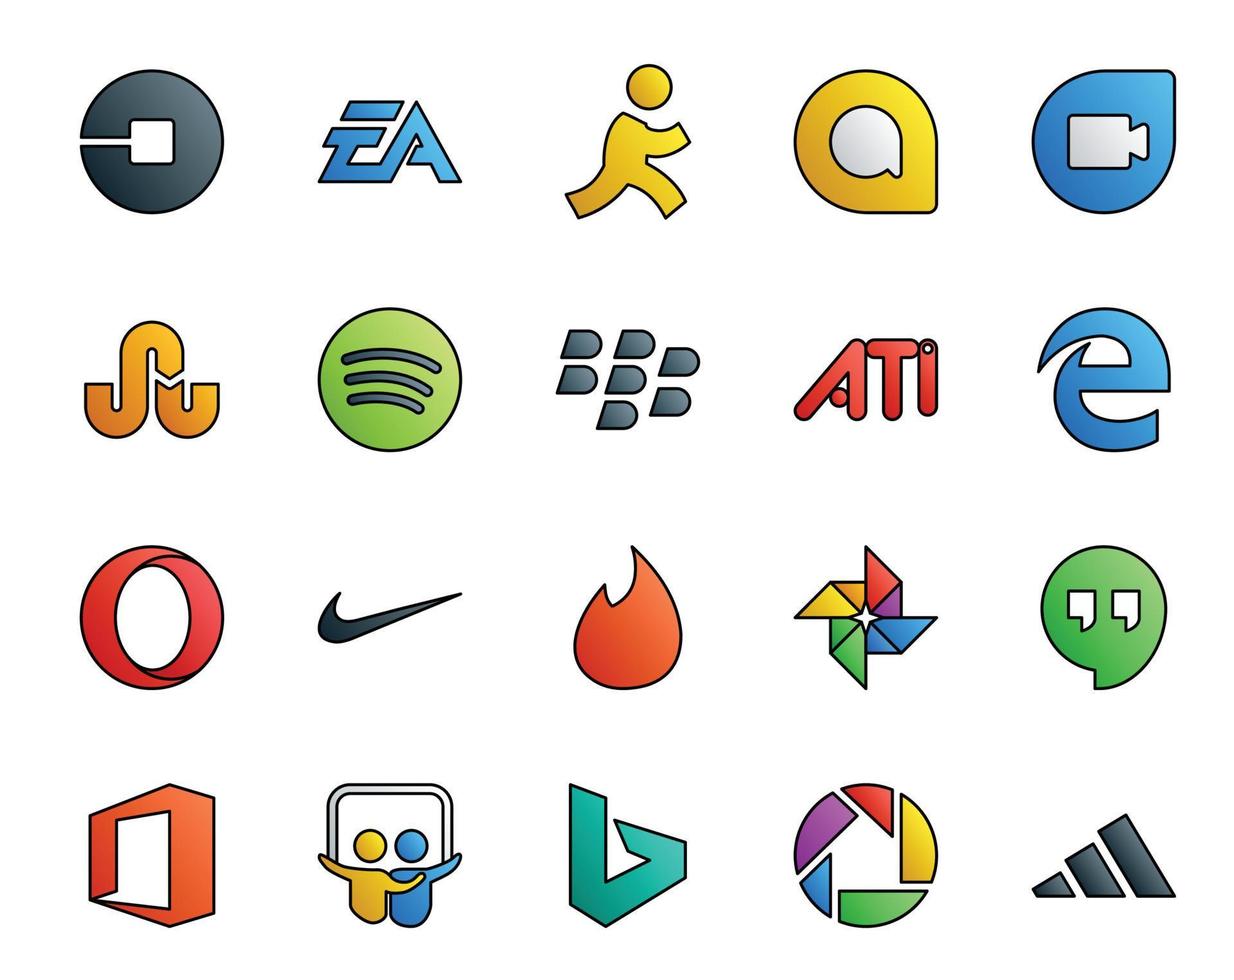 20 Social Media Icon Pack inklusive Foto Nike Google Duo Opera Ati vektor